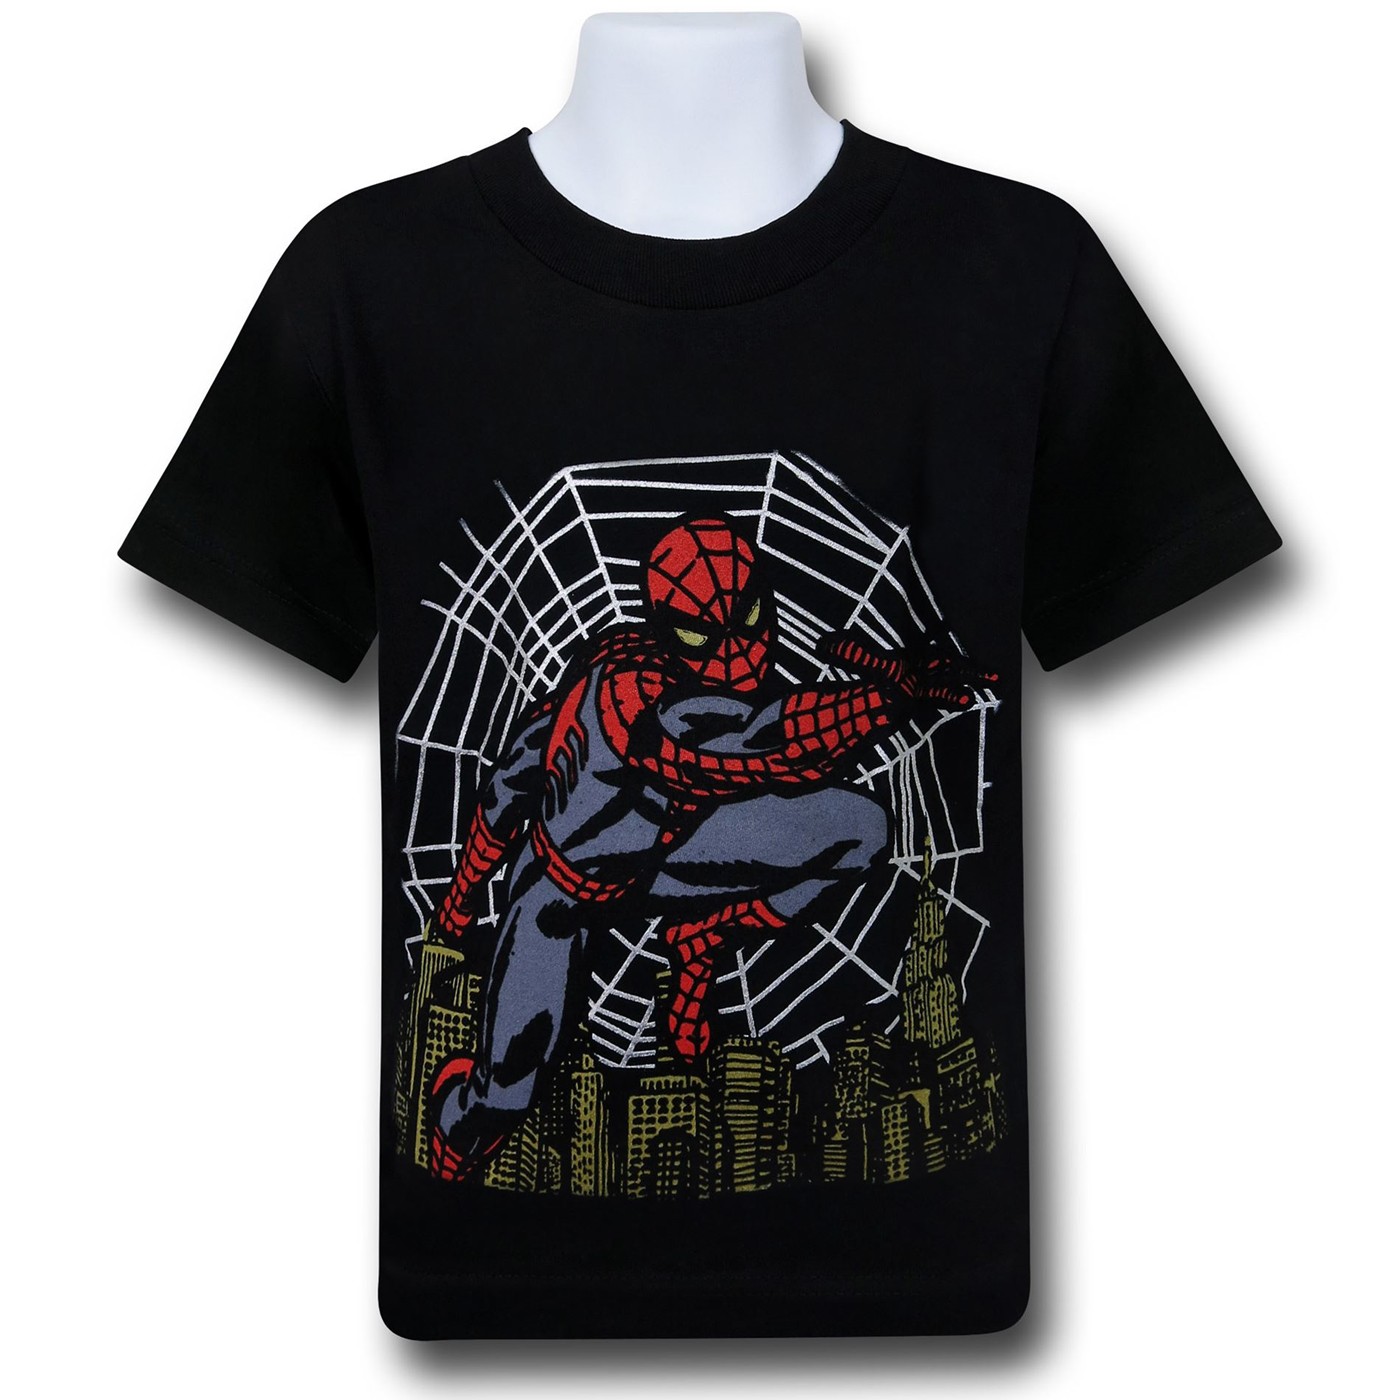 Spiderman Metallic Web Kids T-Shirt